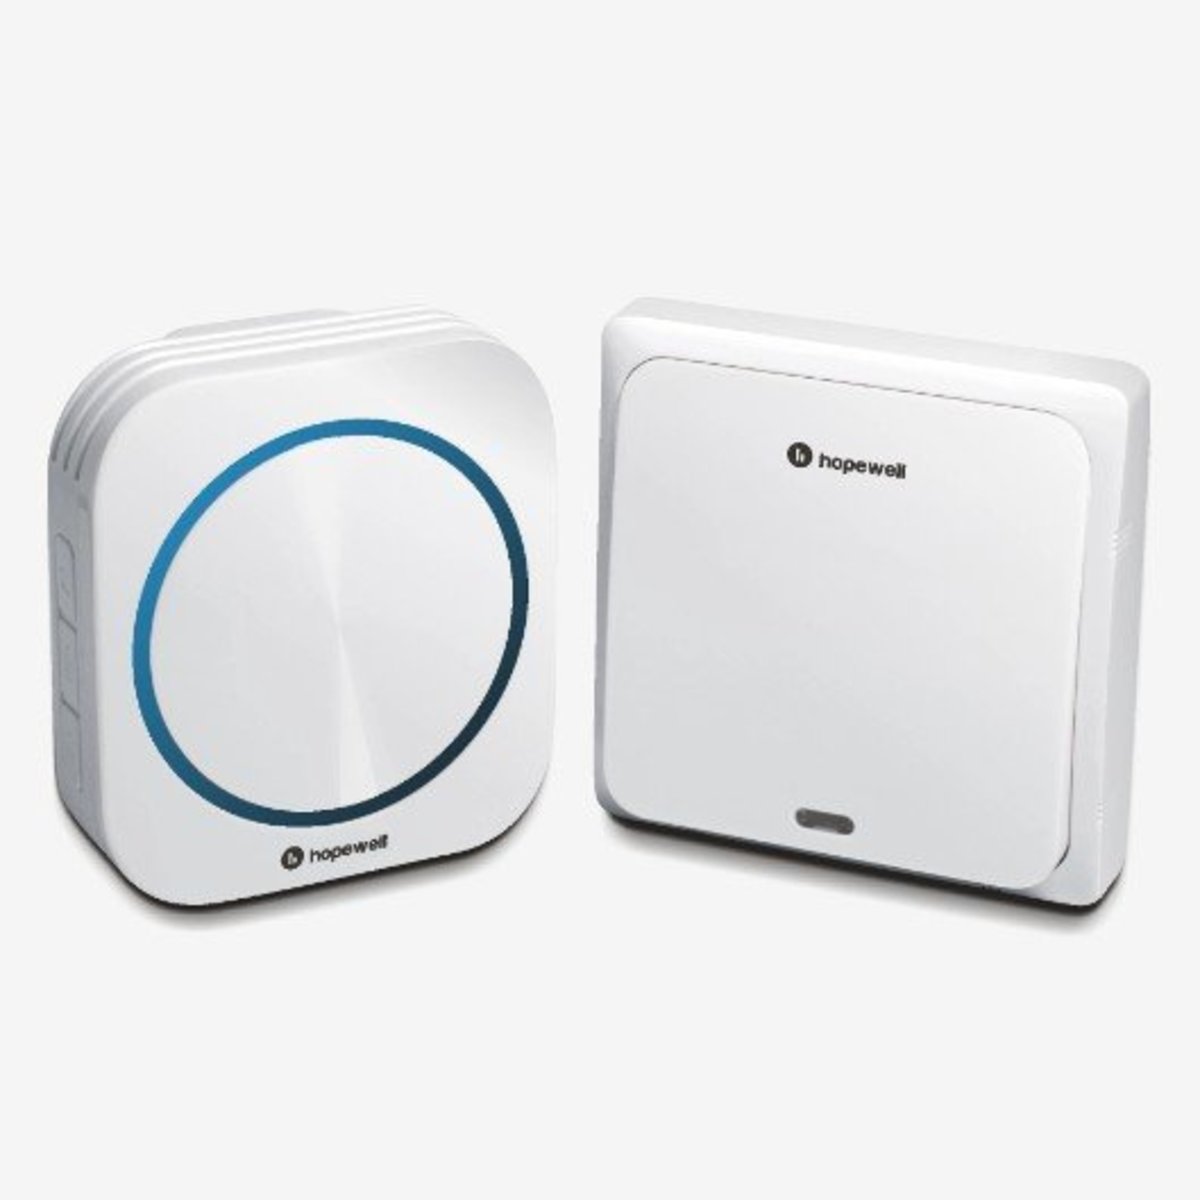 hopewell - DF-331 200m battery-free wireless doorbell (plug-in)